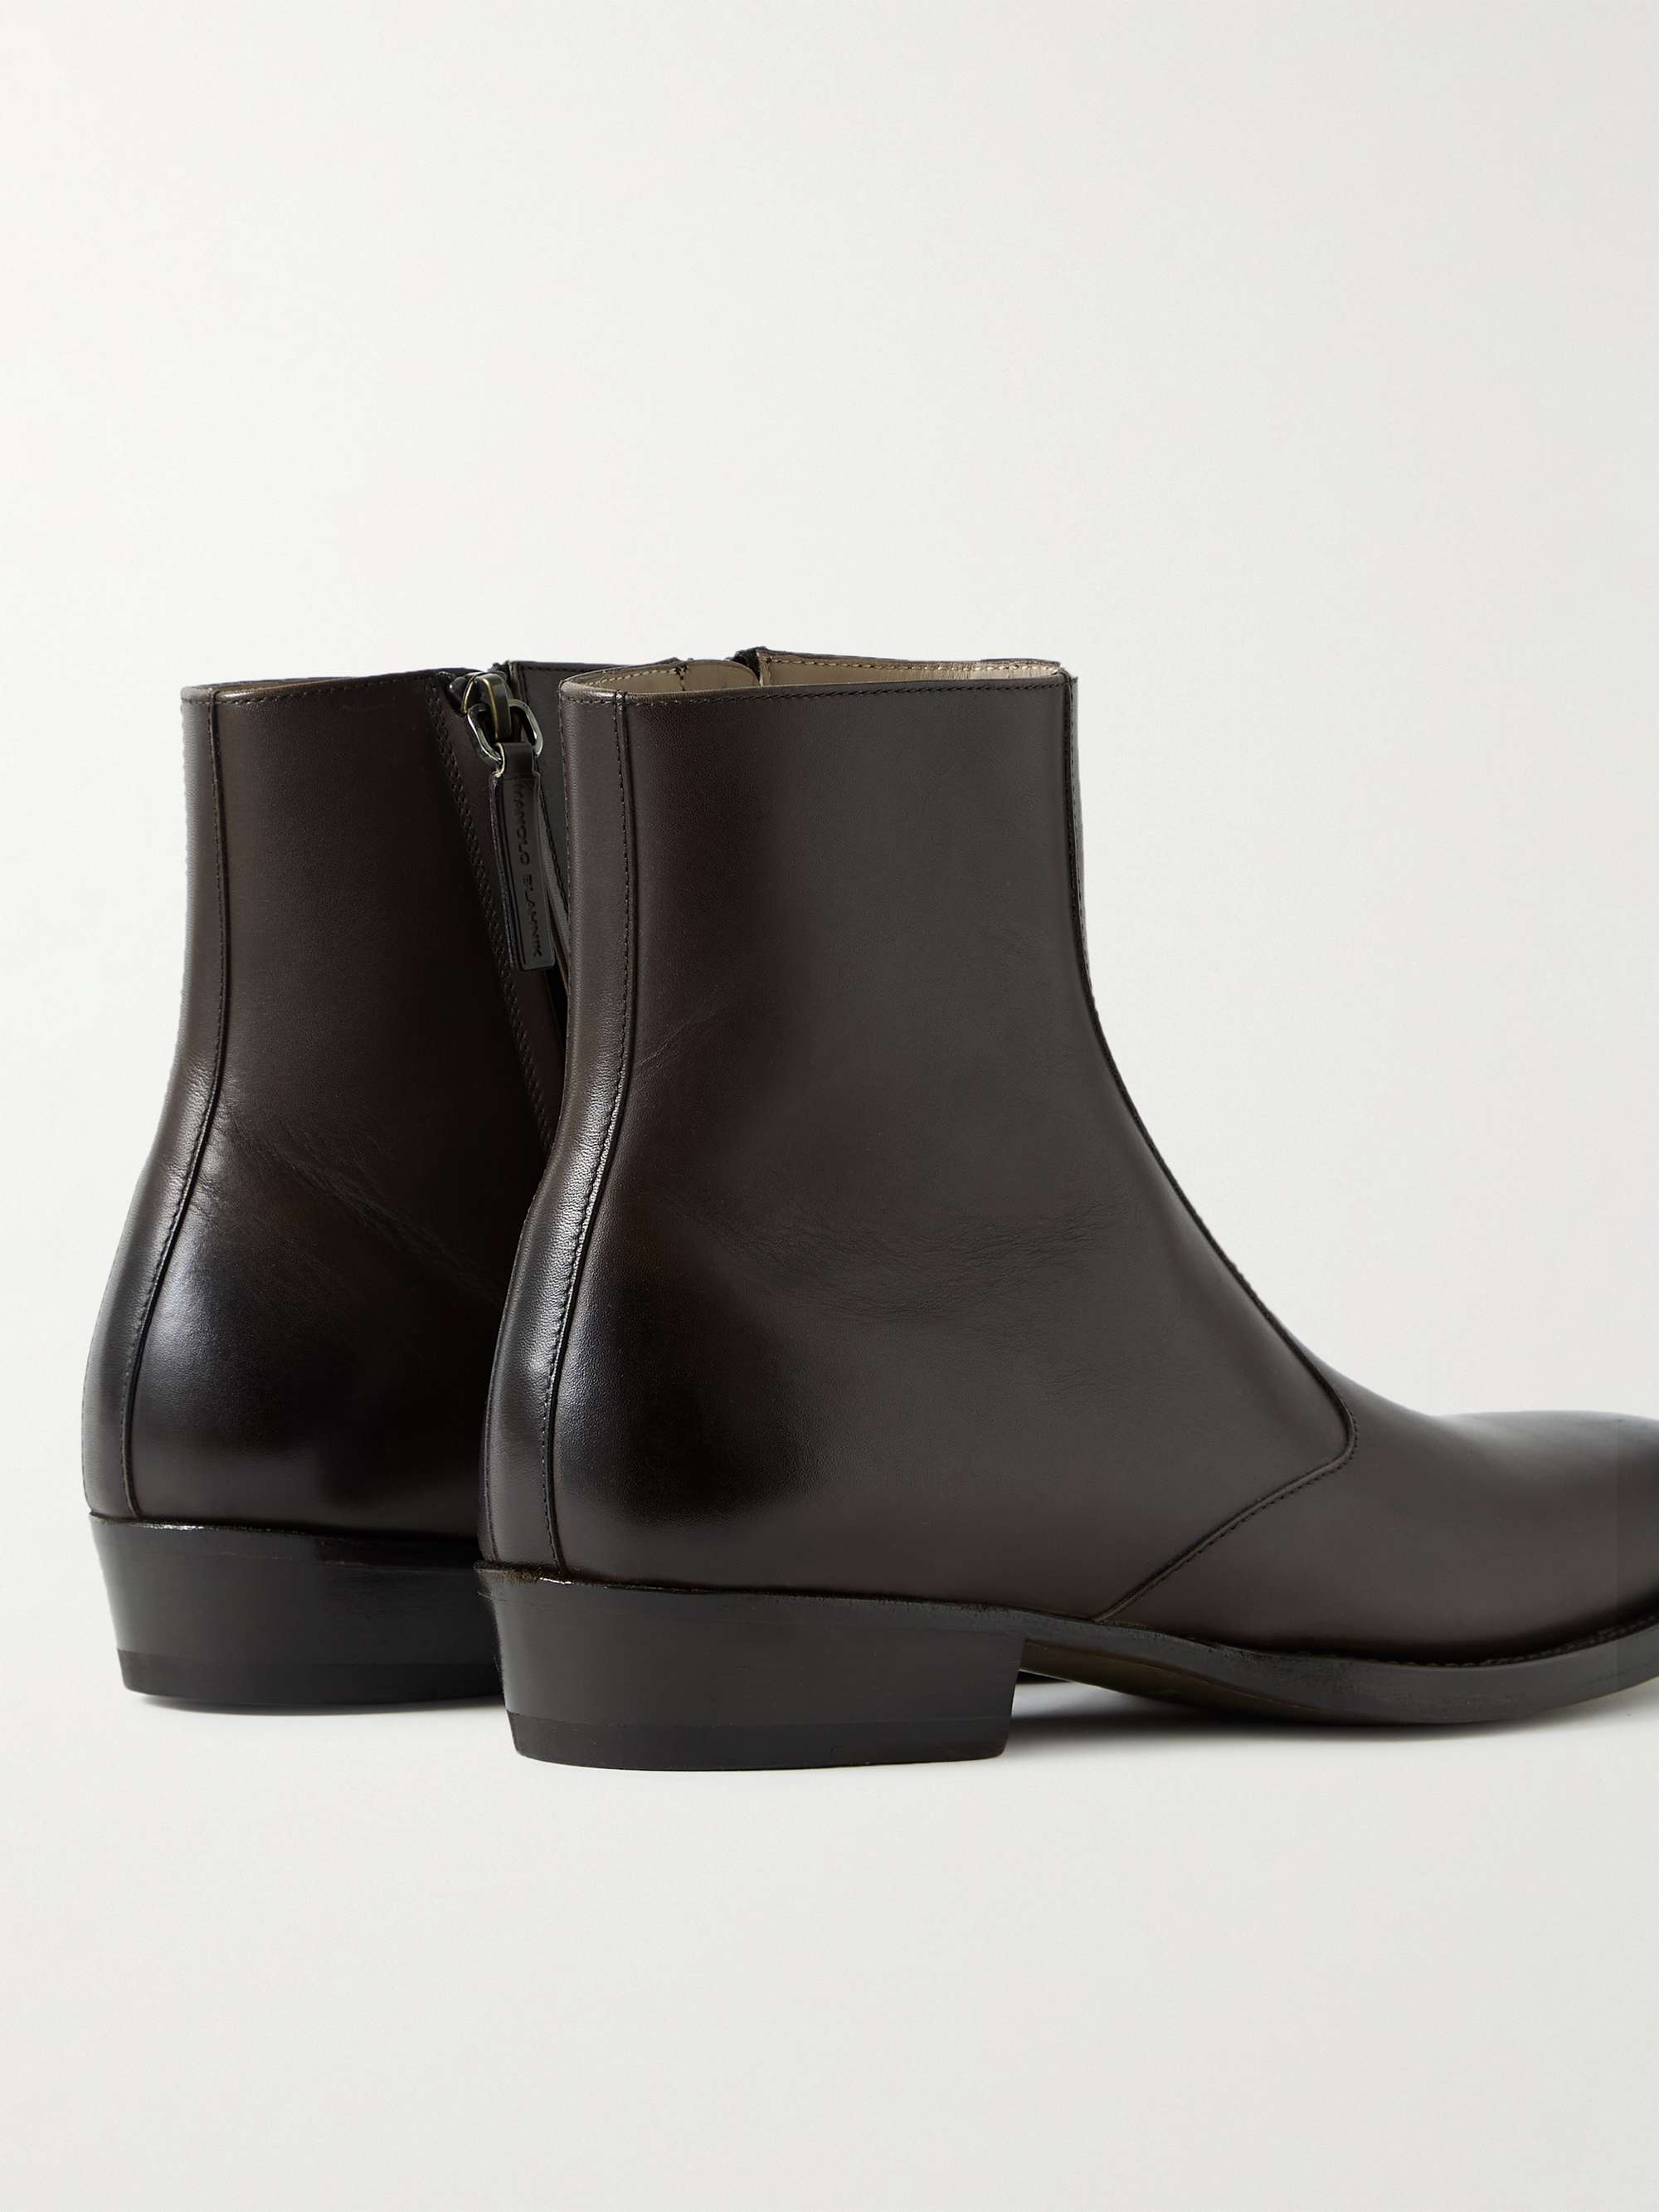 MANOLO BLAHNIK Sloane Leather Boots